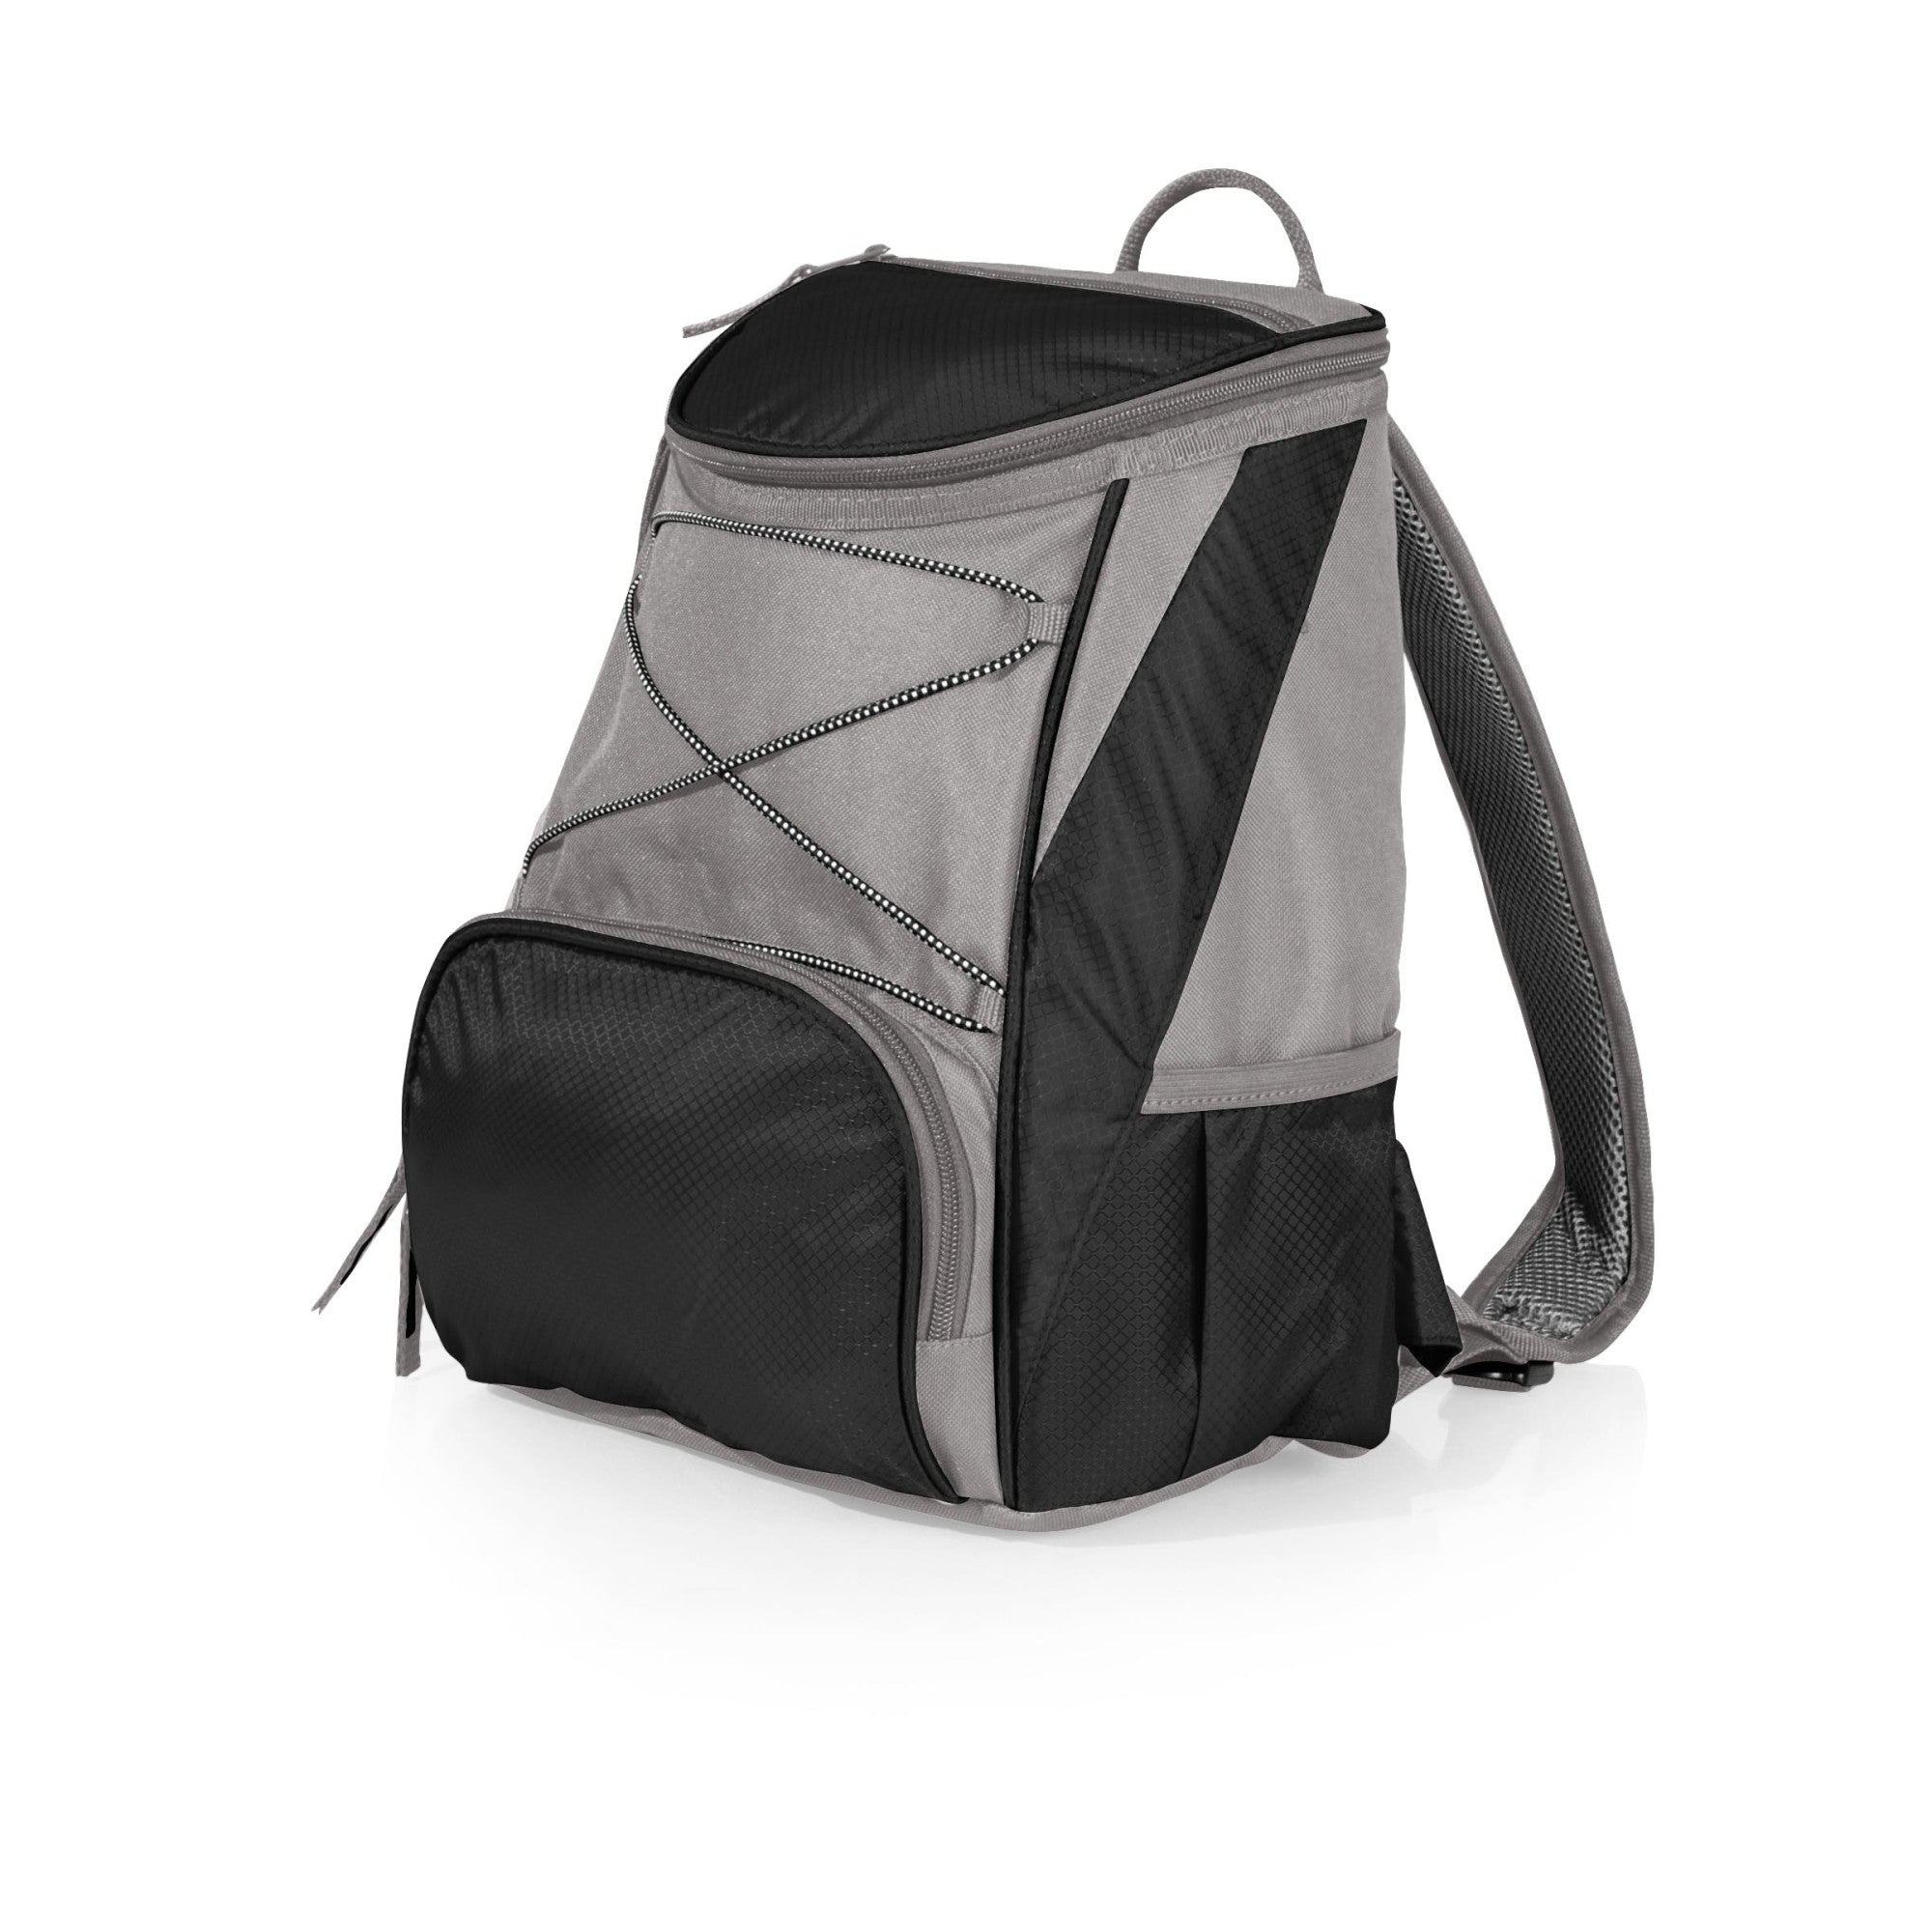 Stanford Cardinal - PTX Backpack Cooler